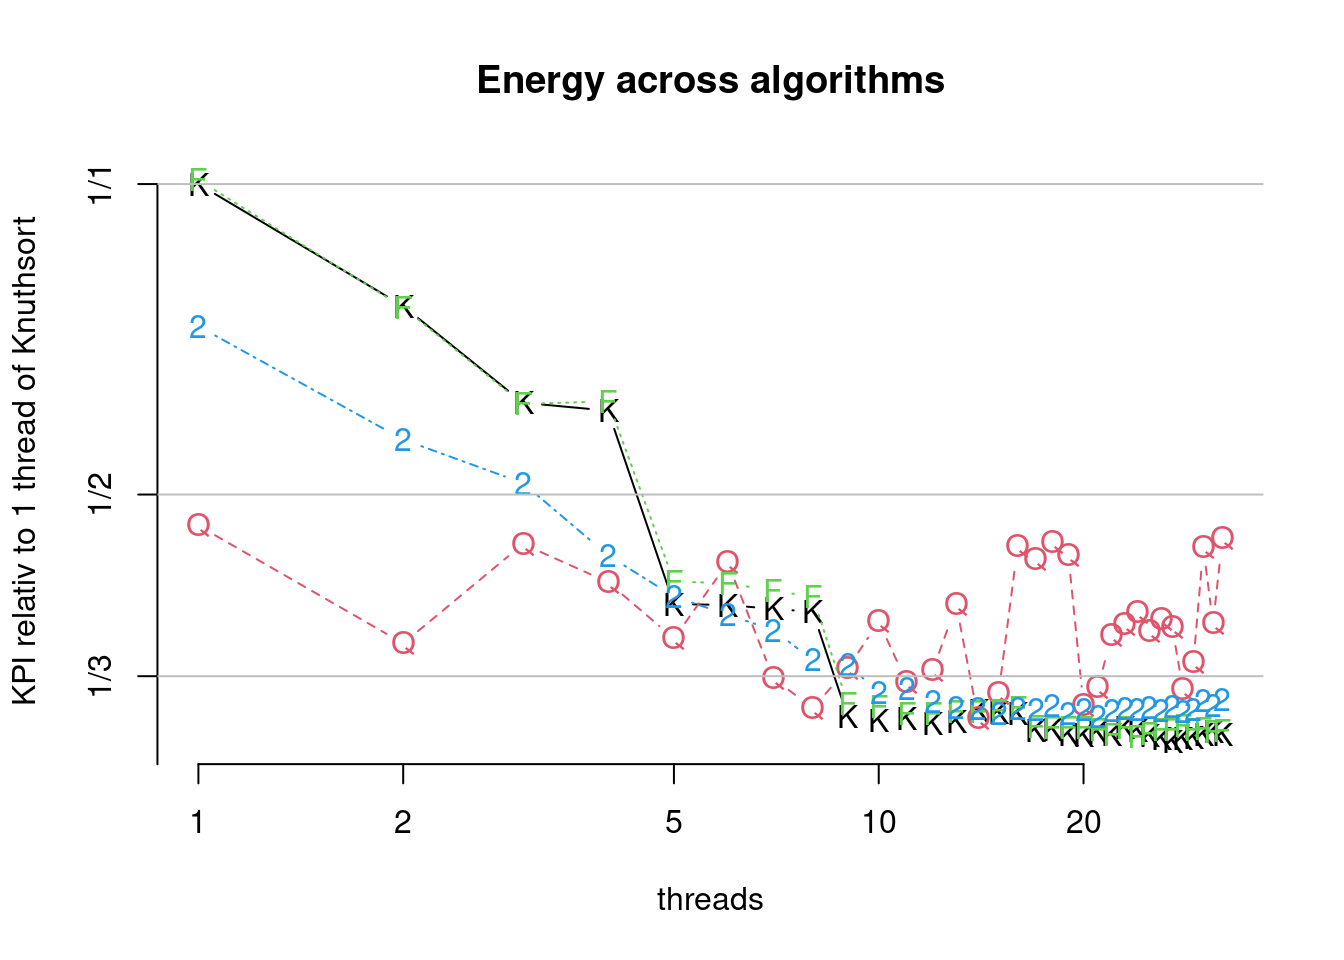 Comparison of parallel algorithms (bcdEnergy). (K)nuthsort  (F)rosgsort0  Frogsort(2)  (Q)uicksort2B